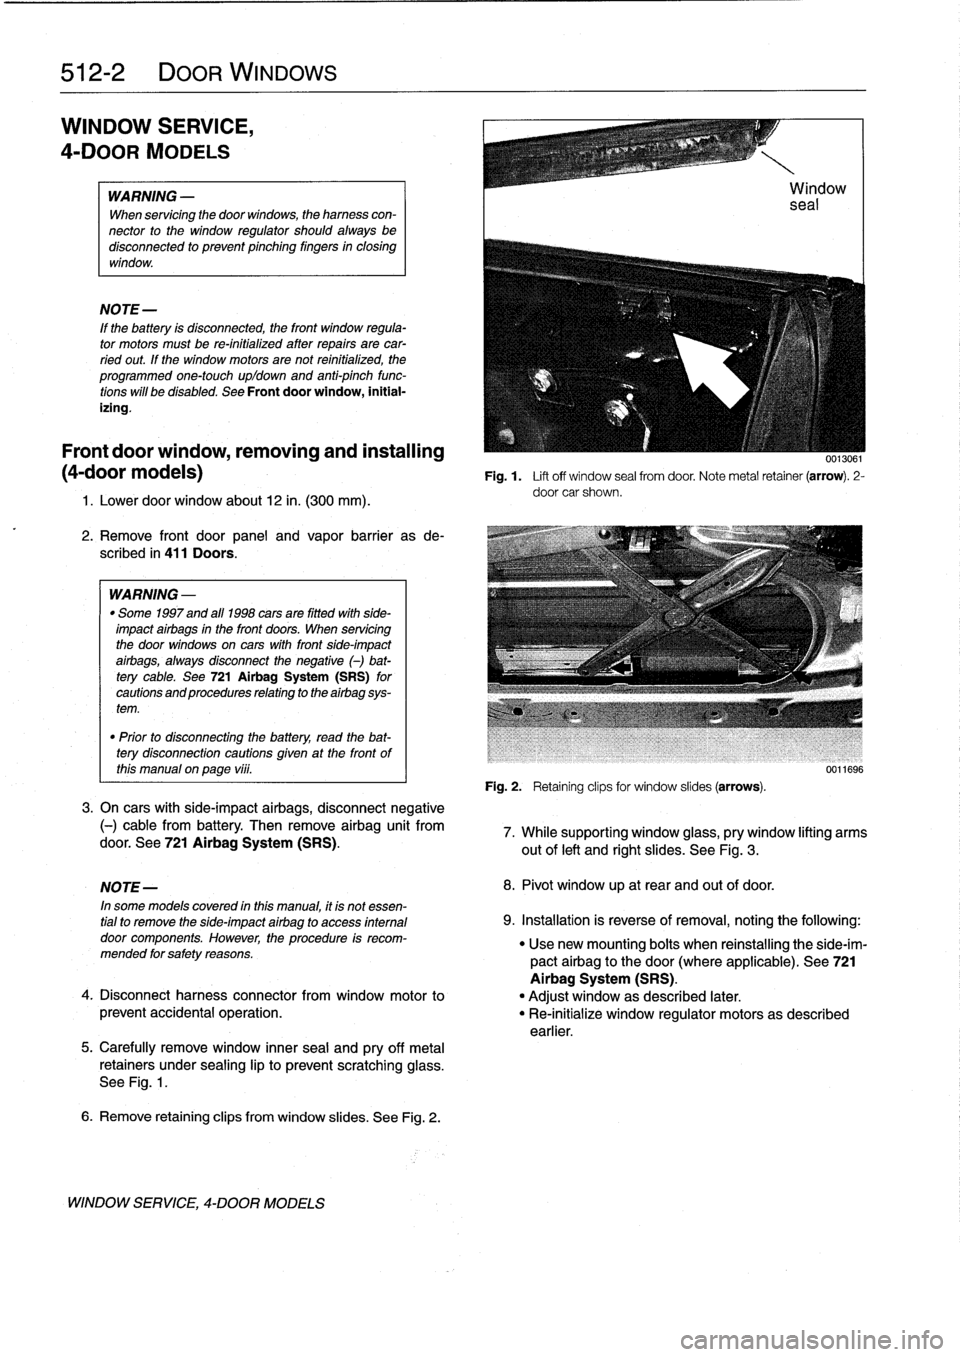 BMW 318i 1997 E36 Workshop Manual 
512-2

	

DOOR
WINDOWS

WINDOW
SERVICE,

4-DOOR
MODELS

WARNING
-

When
servicing
the
door
wíndows,
theharness
con-
nector
to
the
window
regulator
shouldalways
be
disconnected
to
prevent
pinching
fi